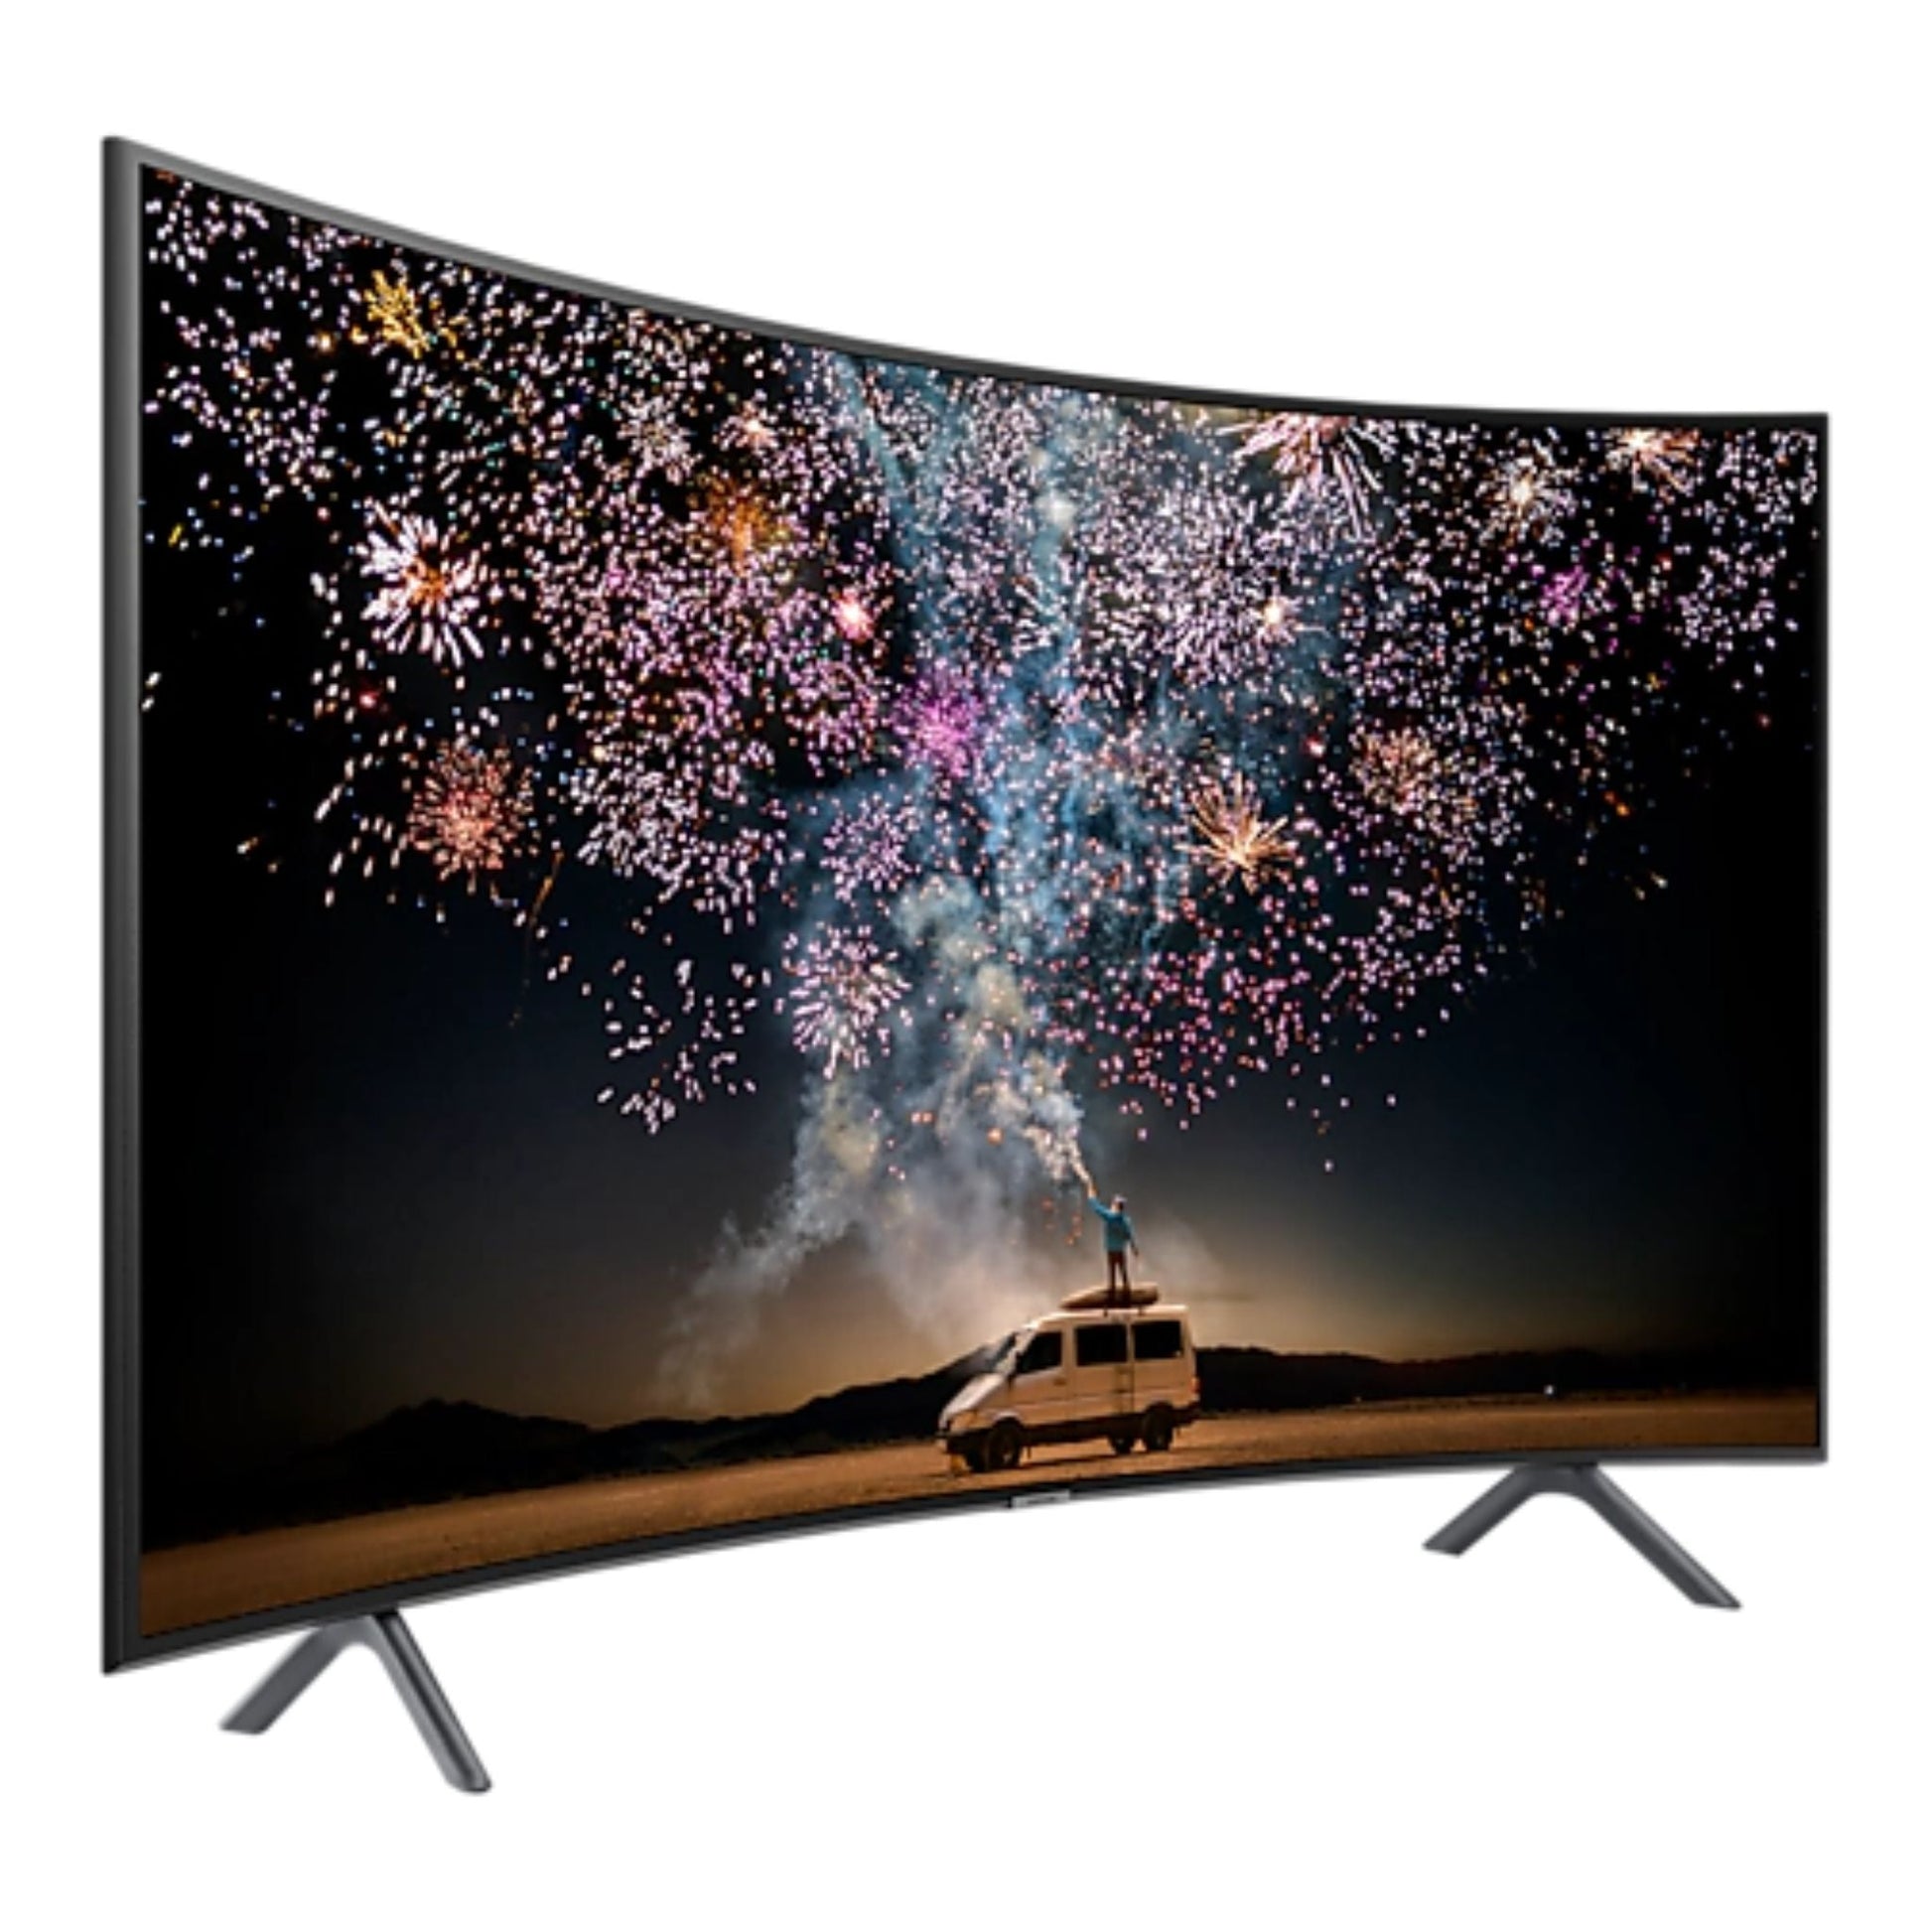 Samsung 65 inch Curved Smart TV, 65TU8300